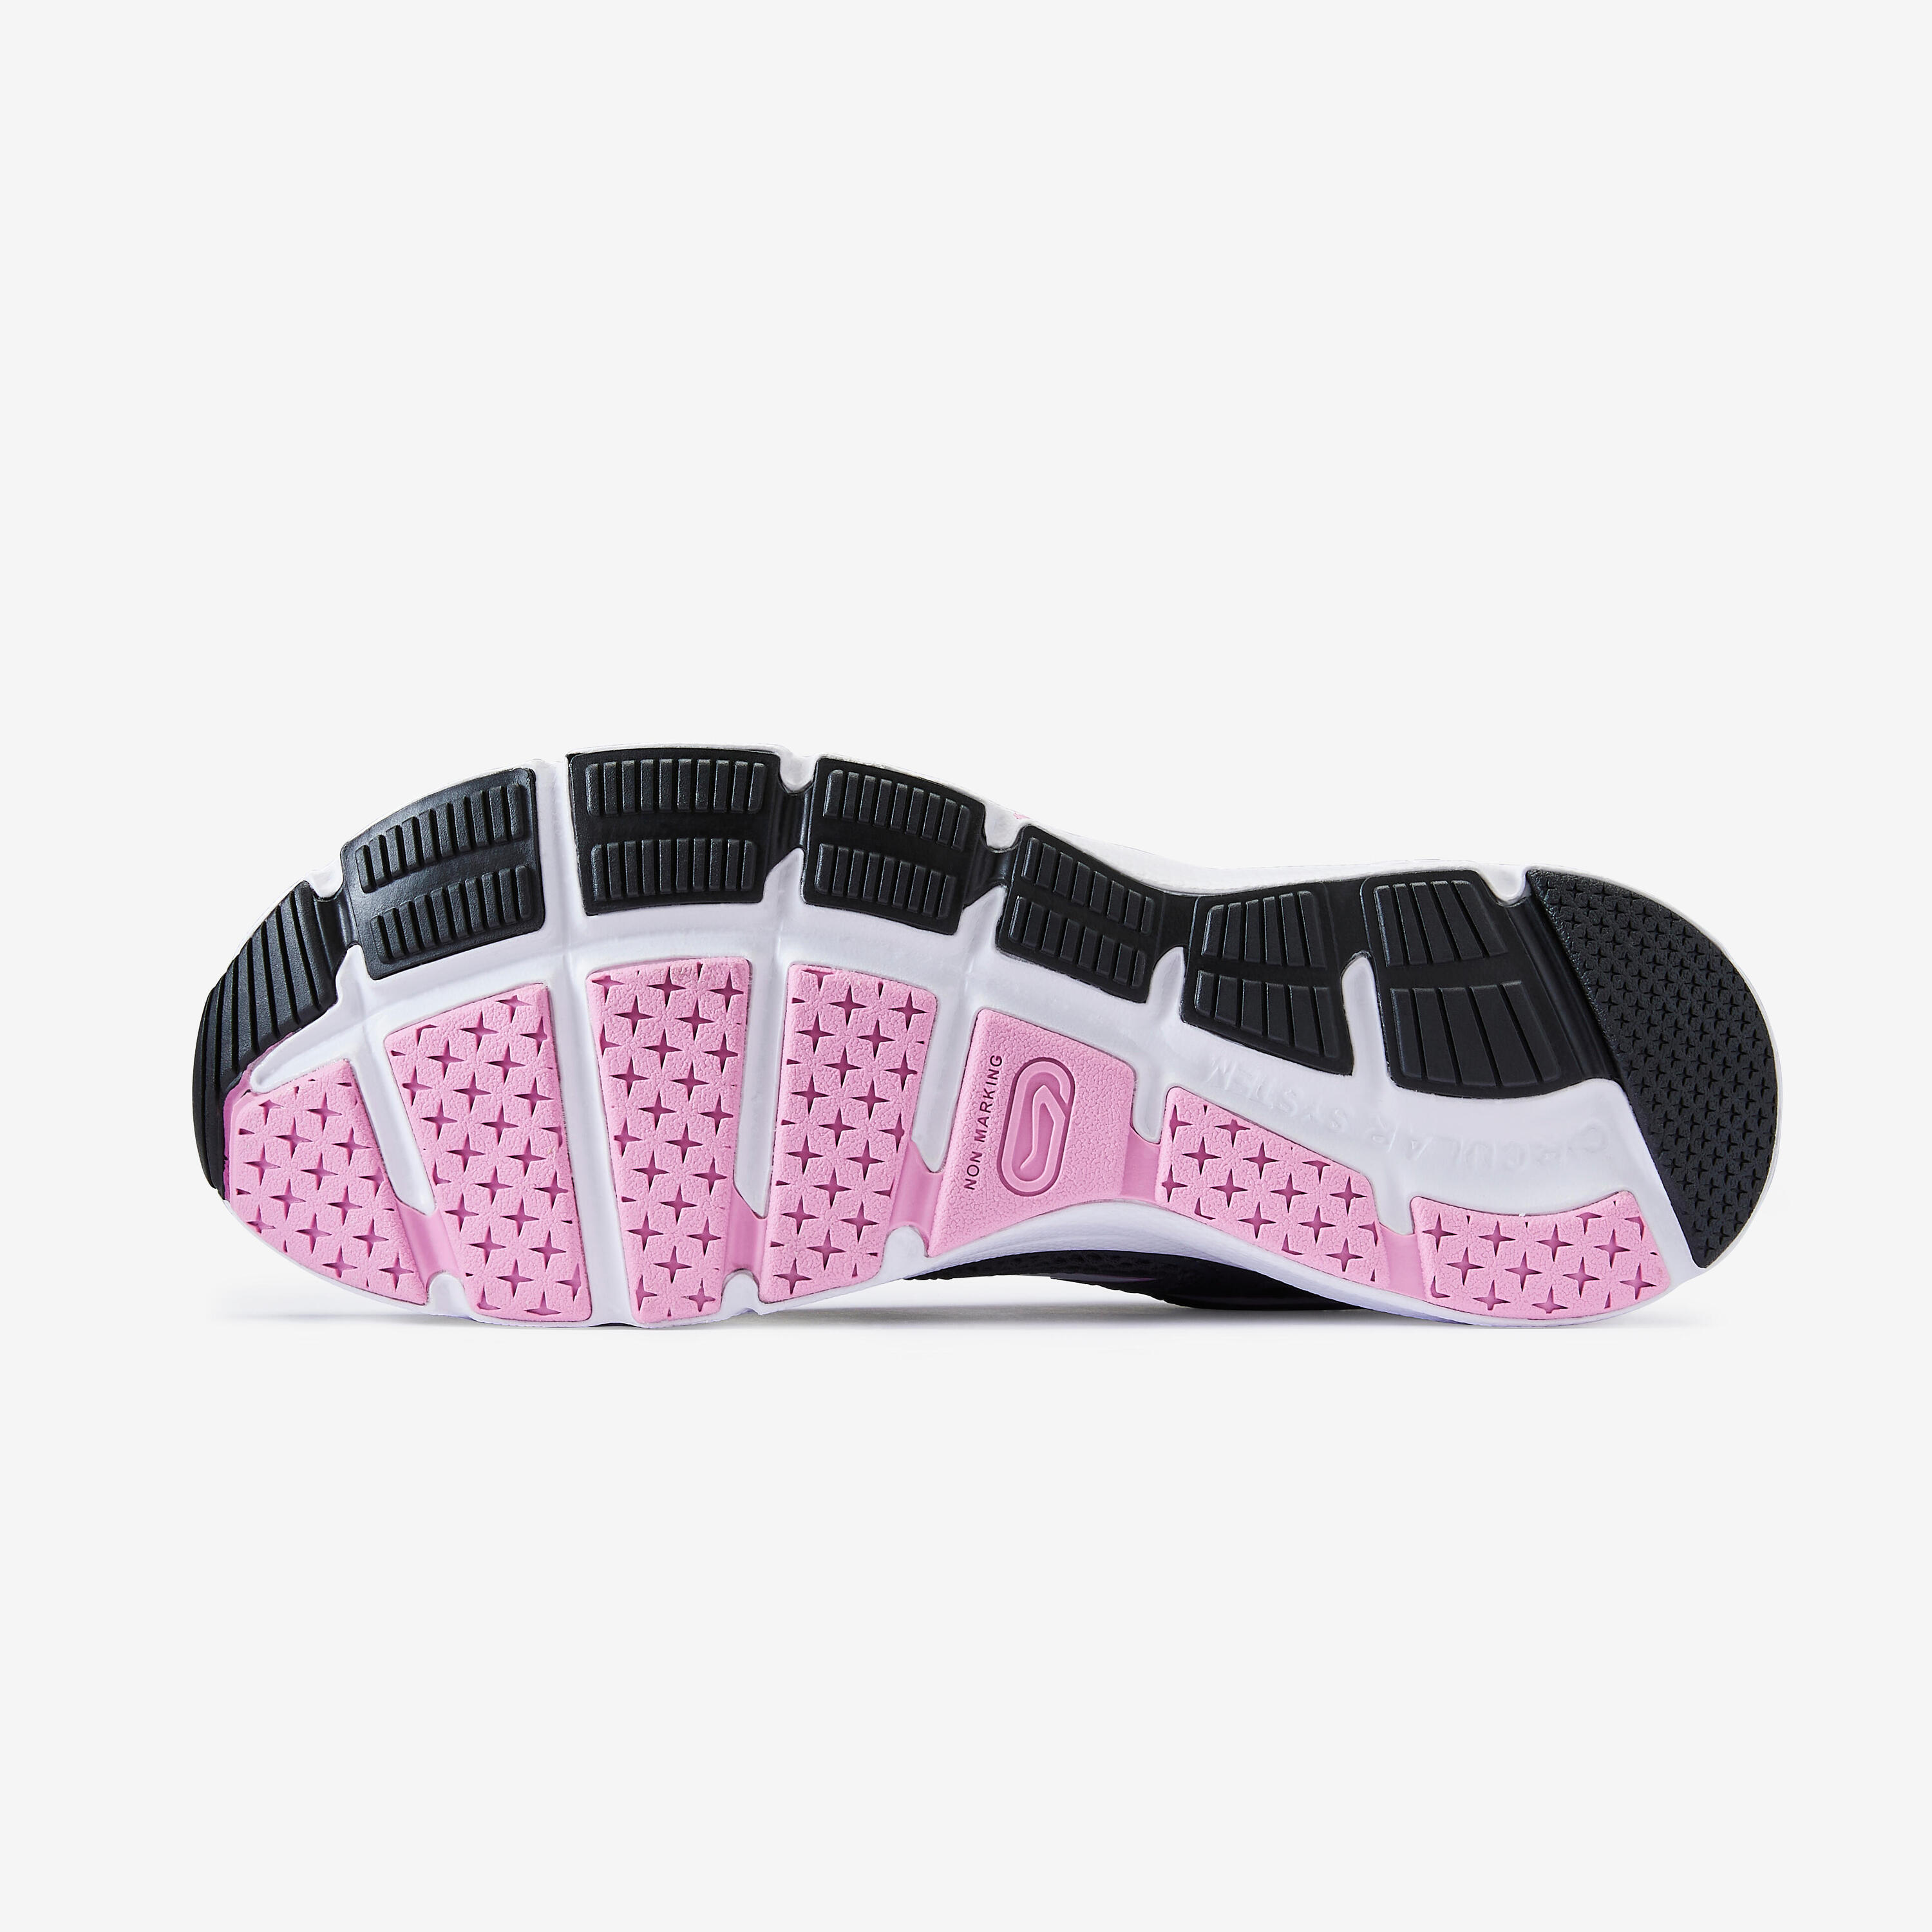 Run Active Women's Running Shoes - Black/Pink 2/7